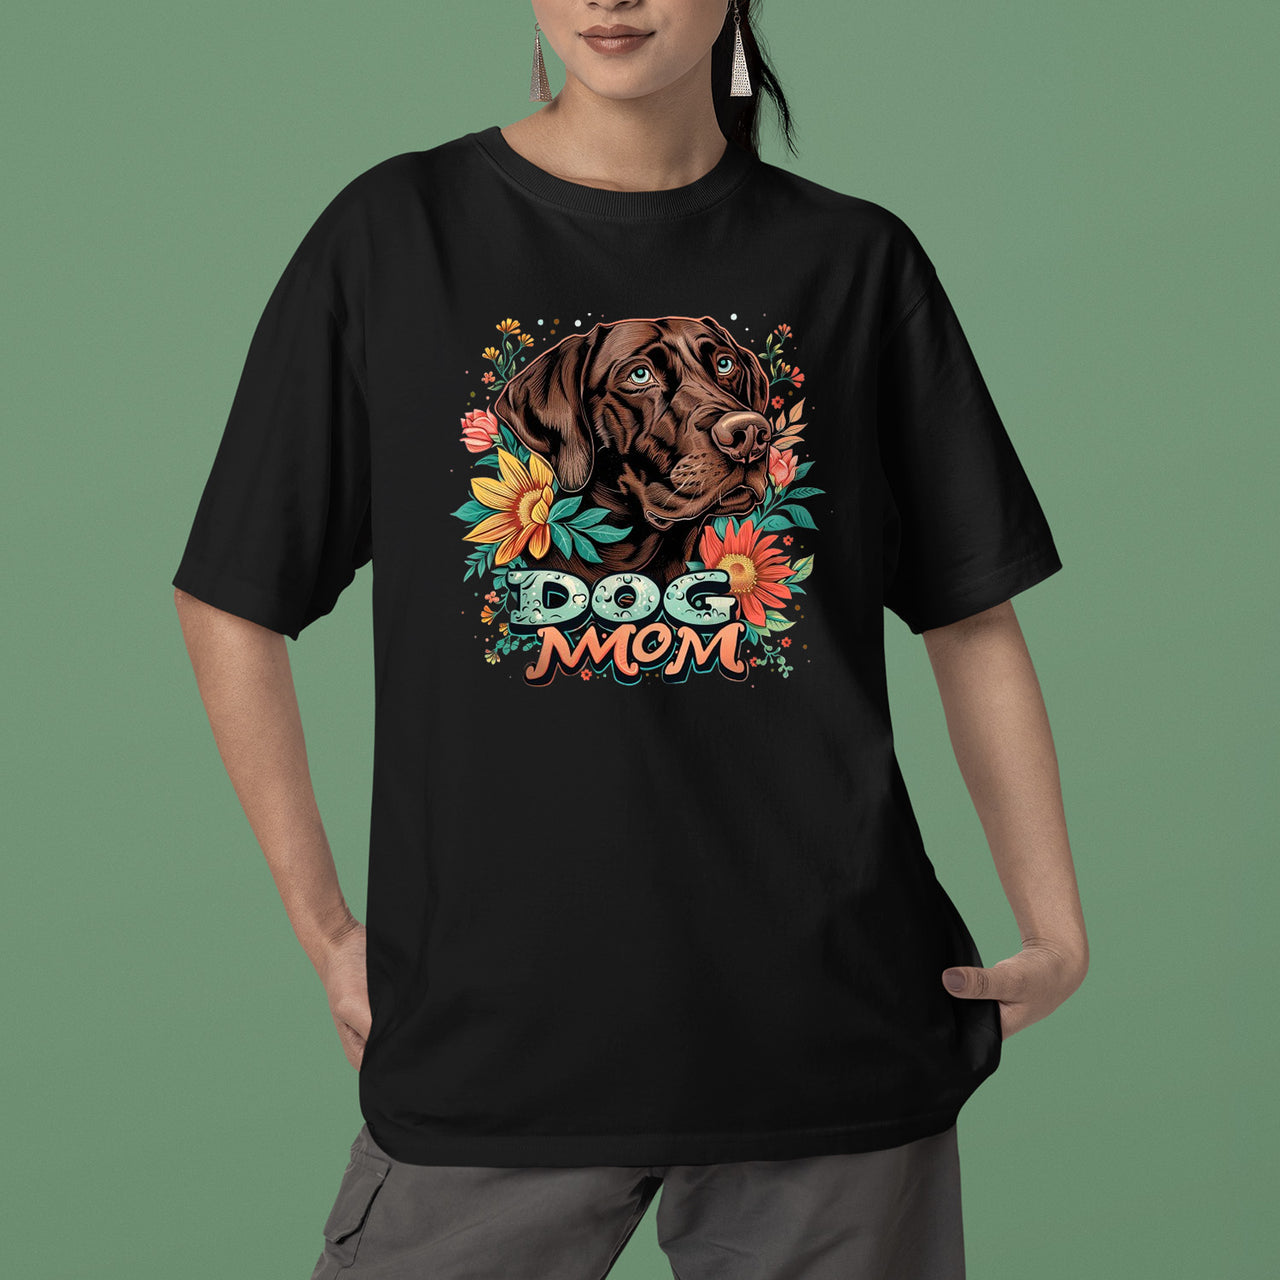 German Shorthaired Pointer Dog T-shirt, Pet Lover Shirt, Dog Lover Shirt, Dog Mom T-Shirt, Dog Owner Shirt, Gift For Dog Mom, Funny Dog Shirts, Women Dog T-Shirt, Mother's Day Gift, Dog Lover Wife Gifts, Dog Shirt